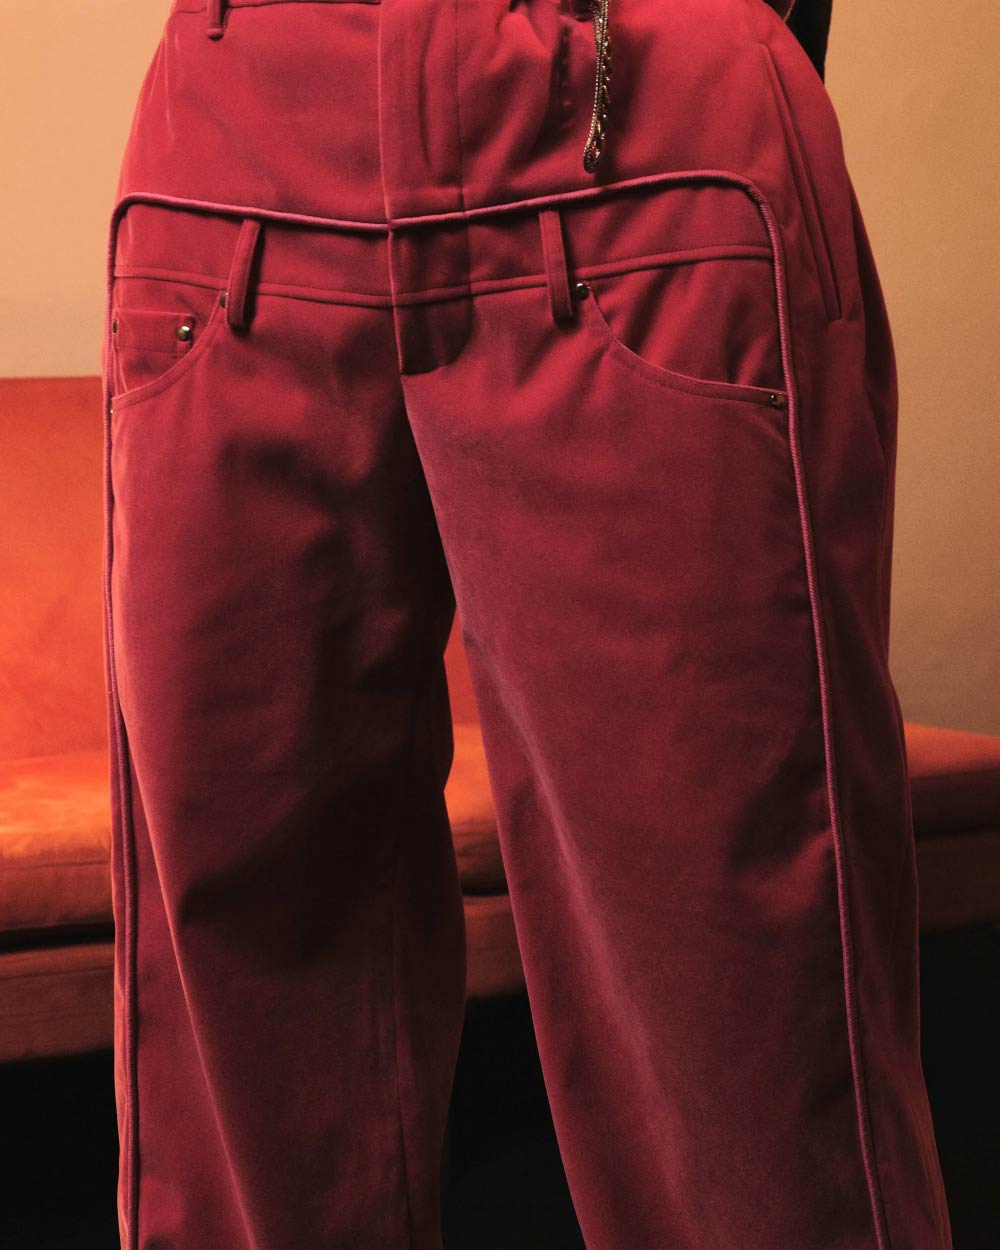 Double Double Pants Pink